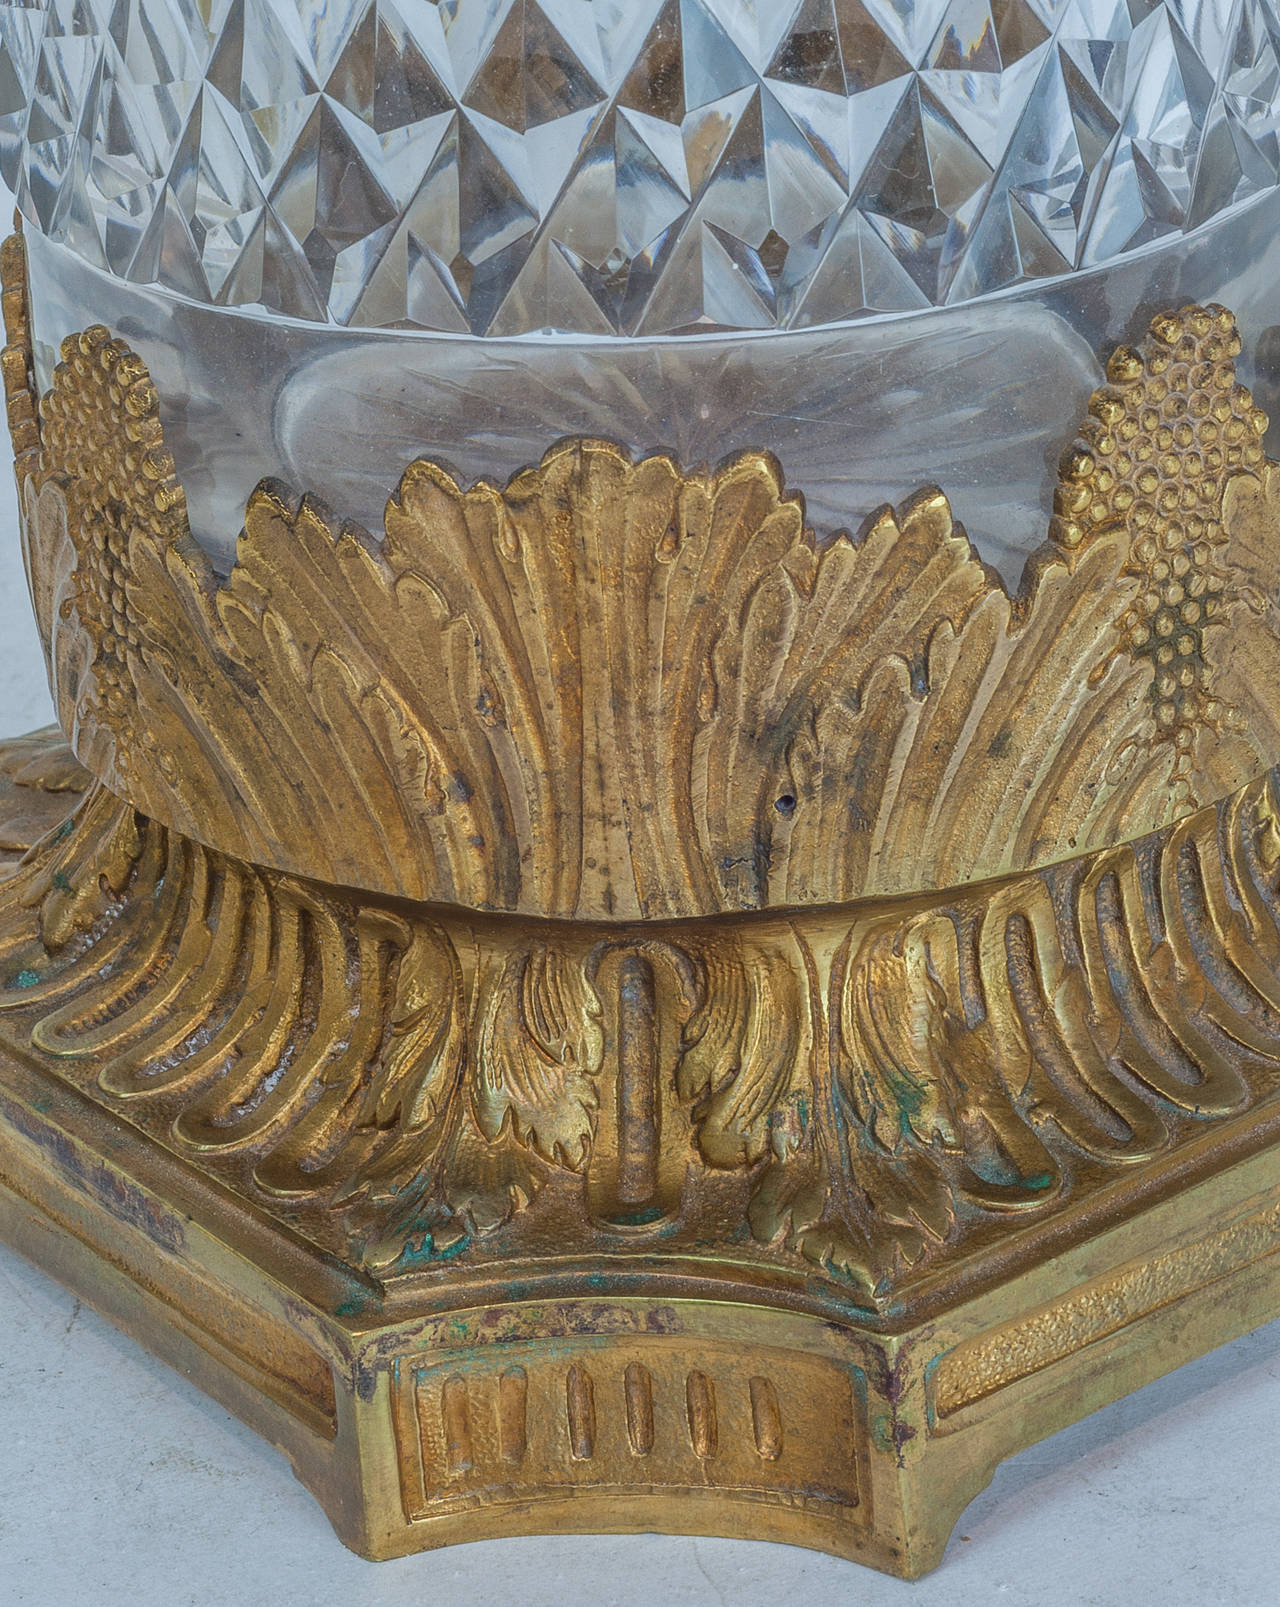 Tall Cylinder Form Crystal and Bronze Flower Vase Centerpiece
Stock Number: DA42